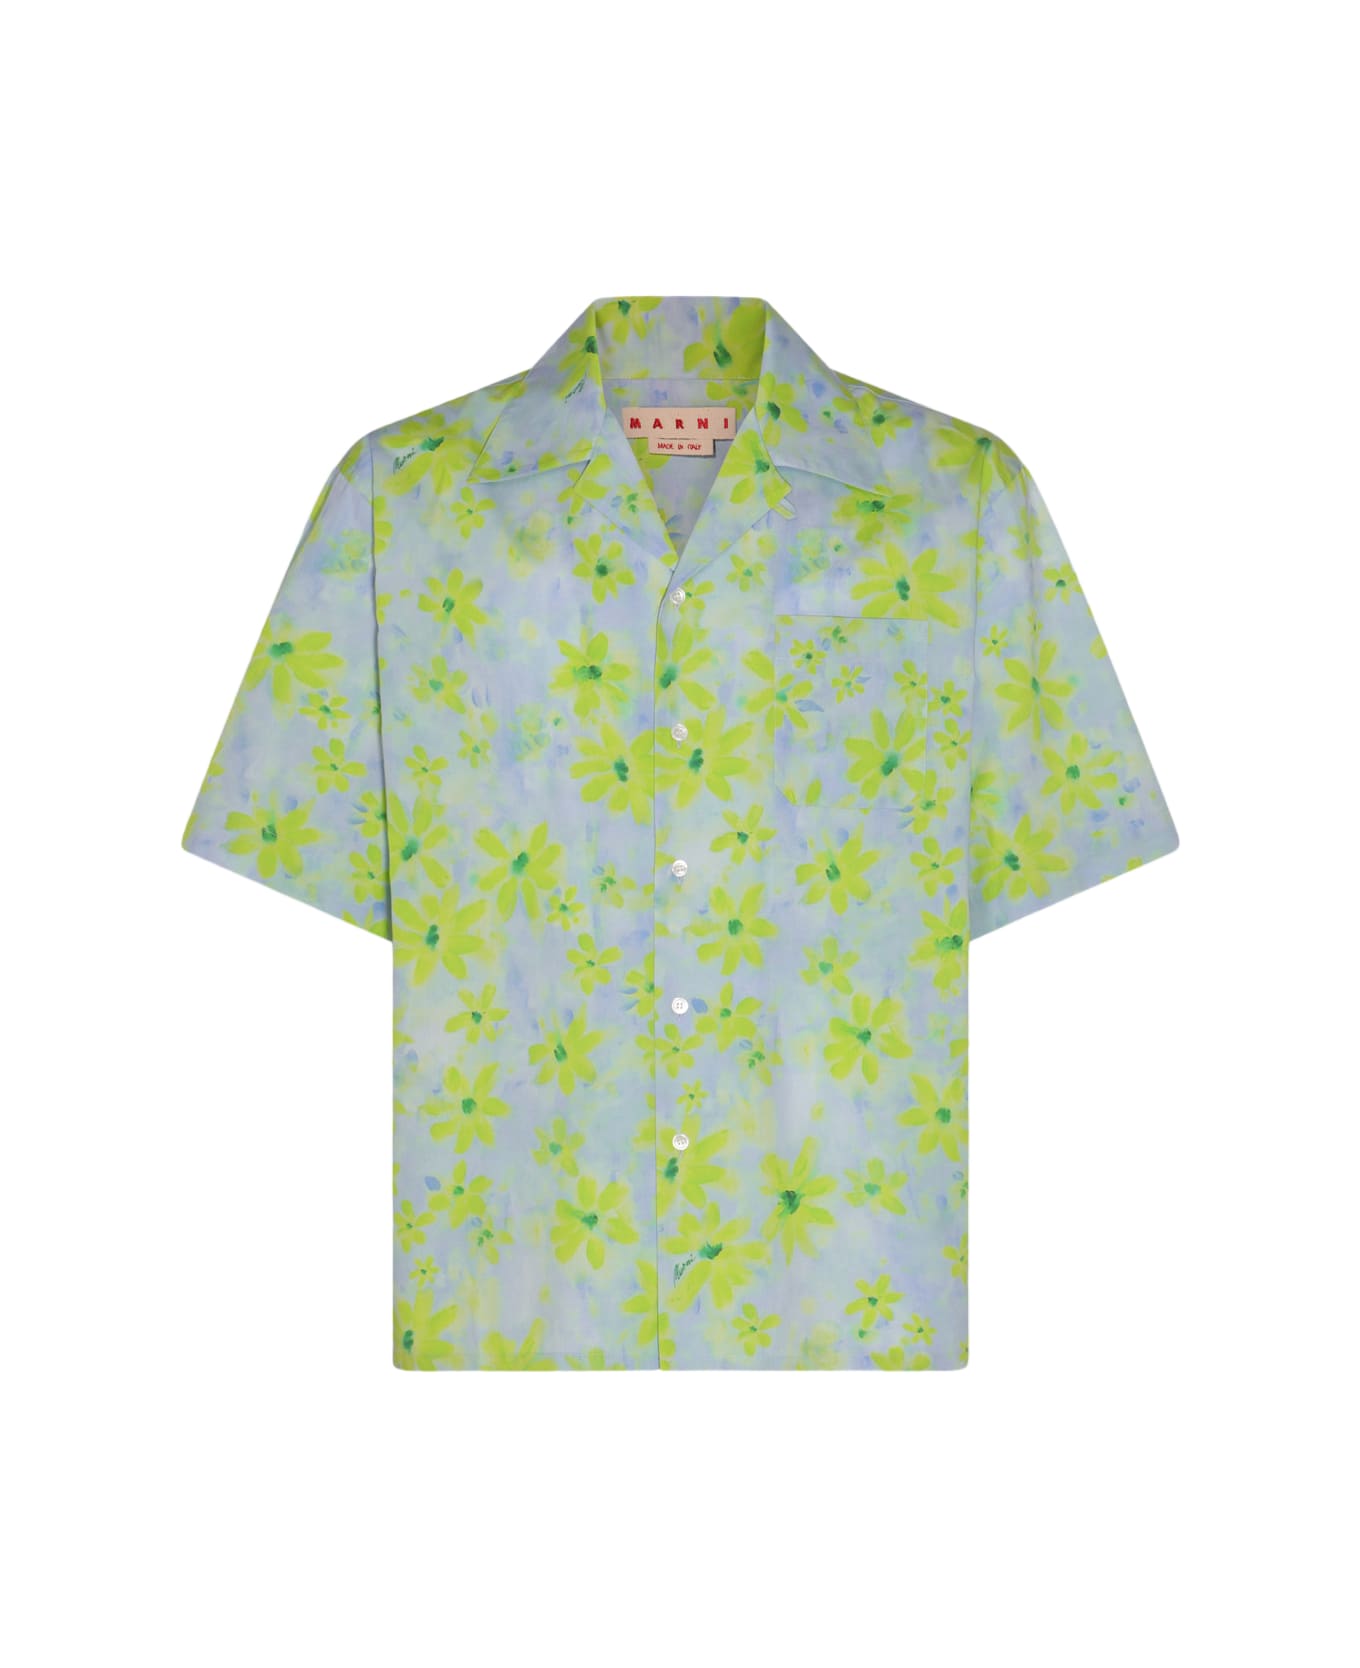 Marni Aquamarine And Green Cotton Shirt - AQUAMARINE